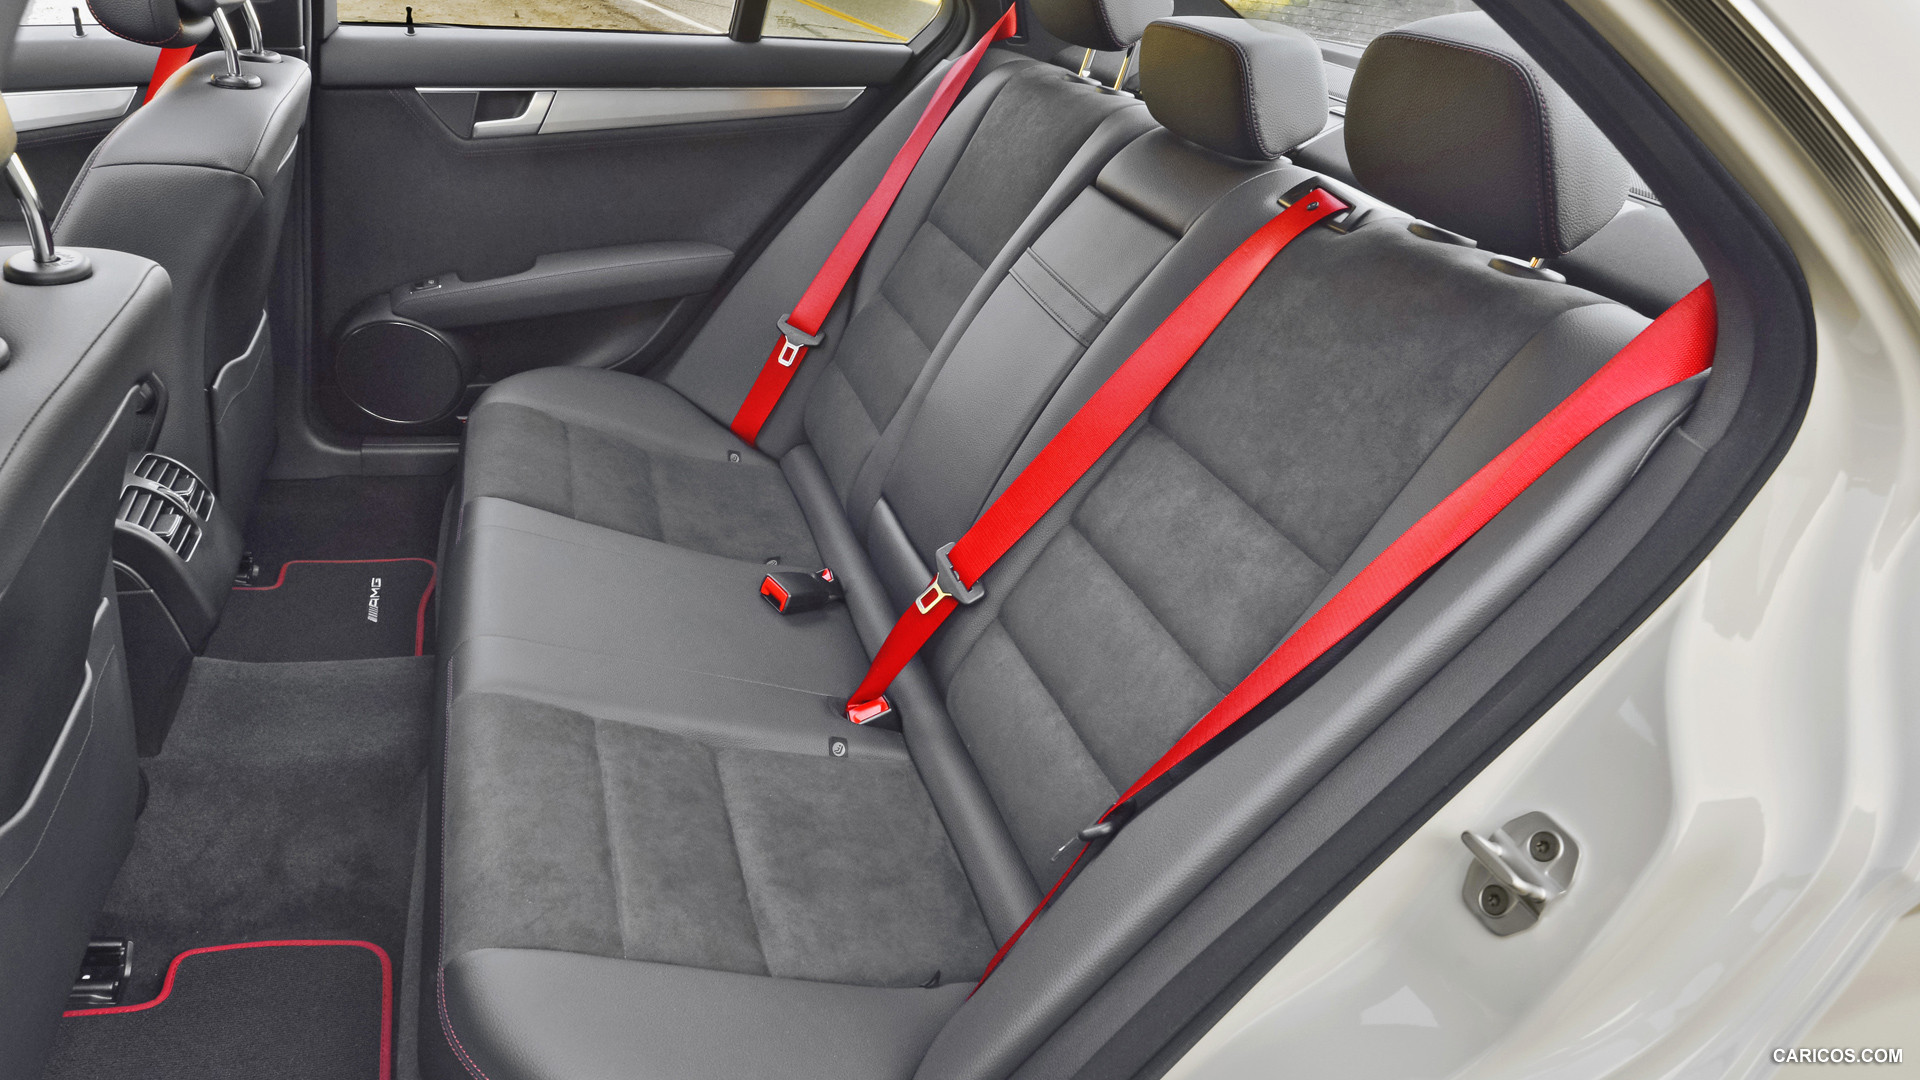 2013 Mercedes-Benz C300 4MATIC Sedan Sport Package Plus  - Interior Rear Seats, #87 of 122